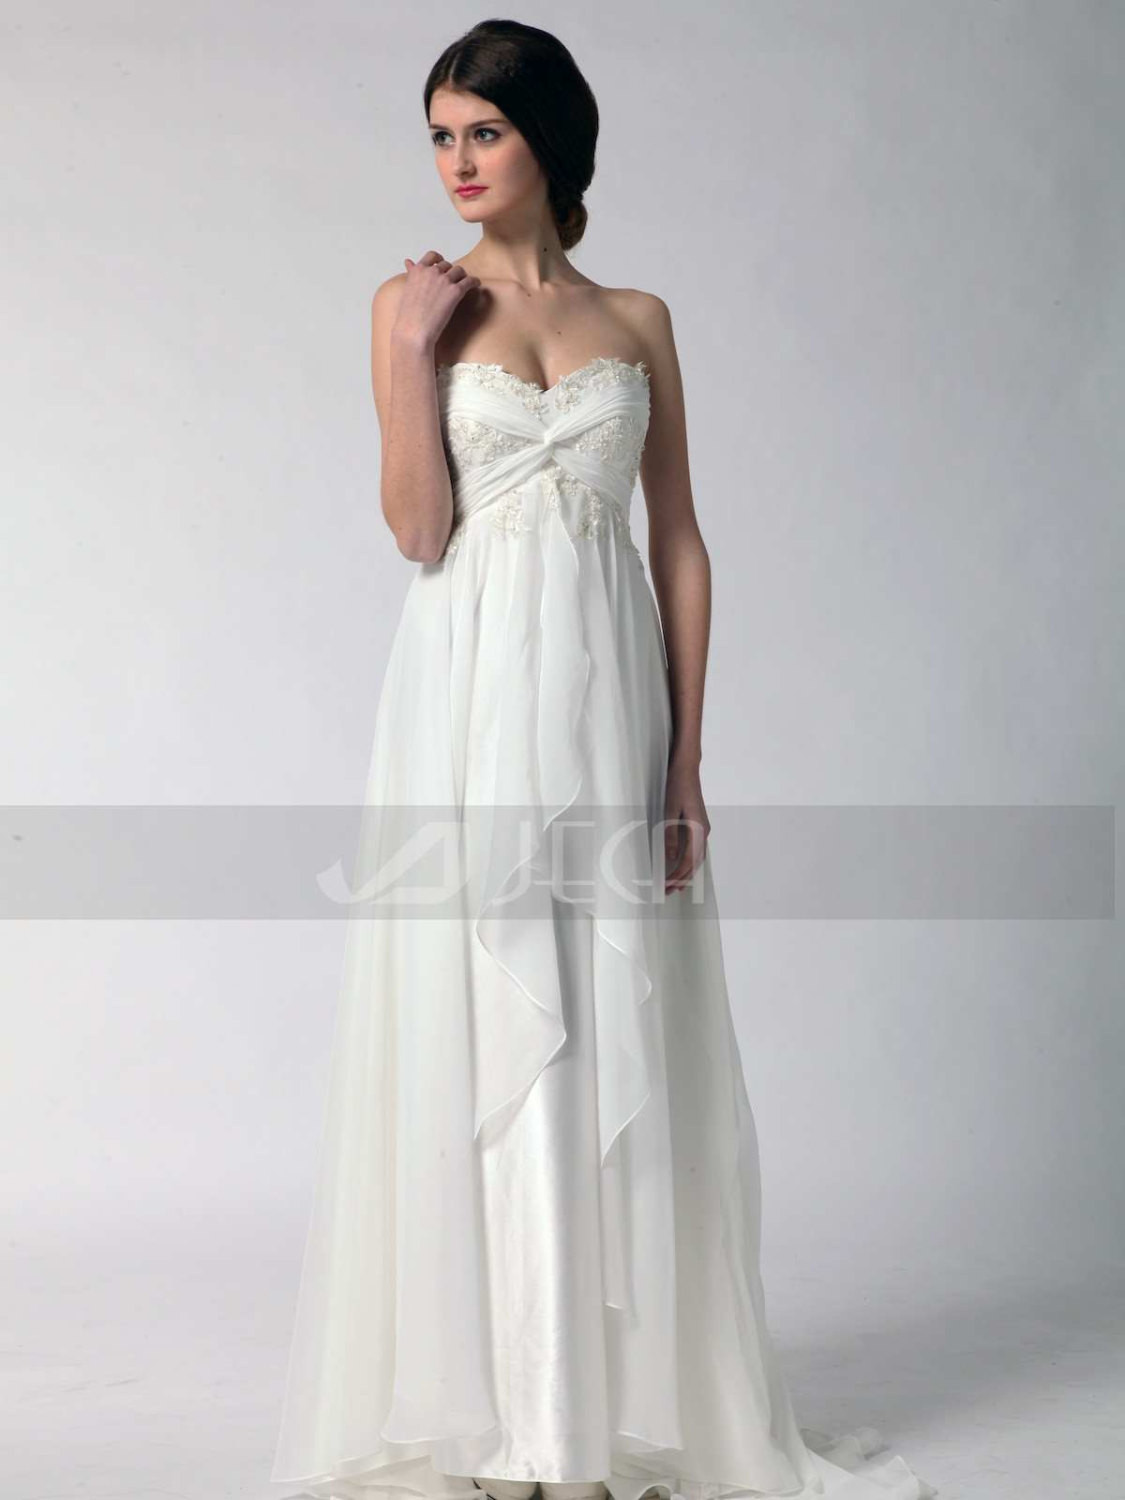 Grecian Wedding Dress
 Grecian Wedding Dress Beach Causal Wedding Dress By